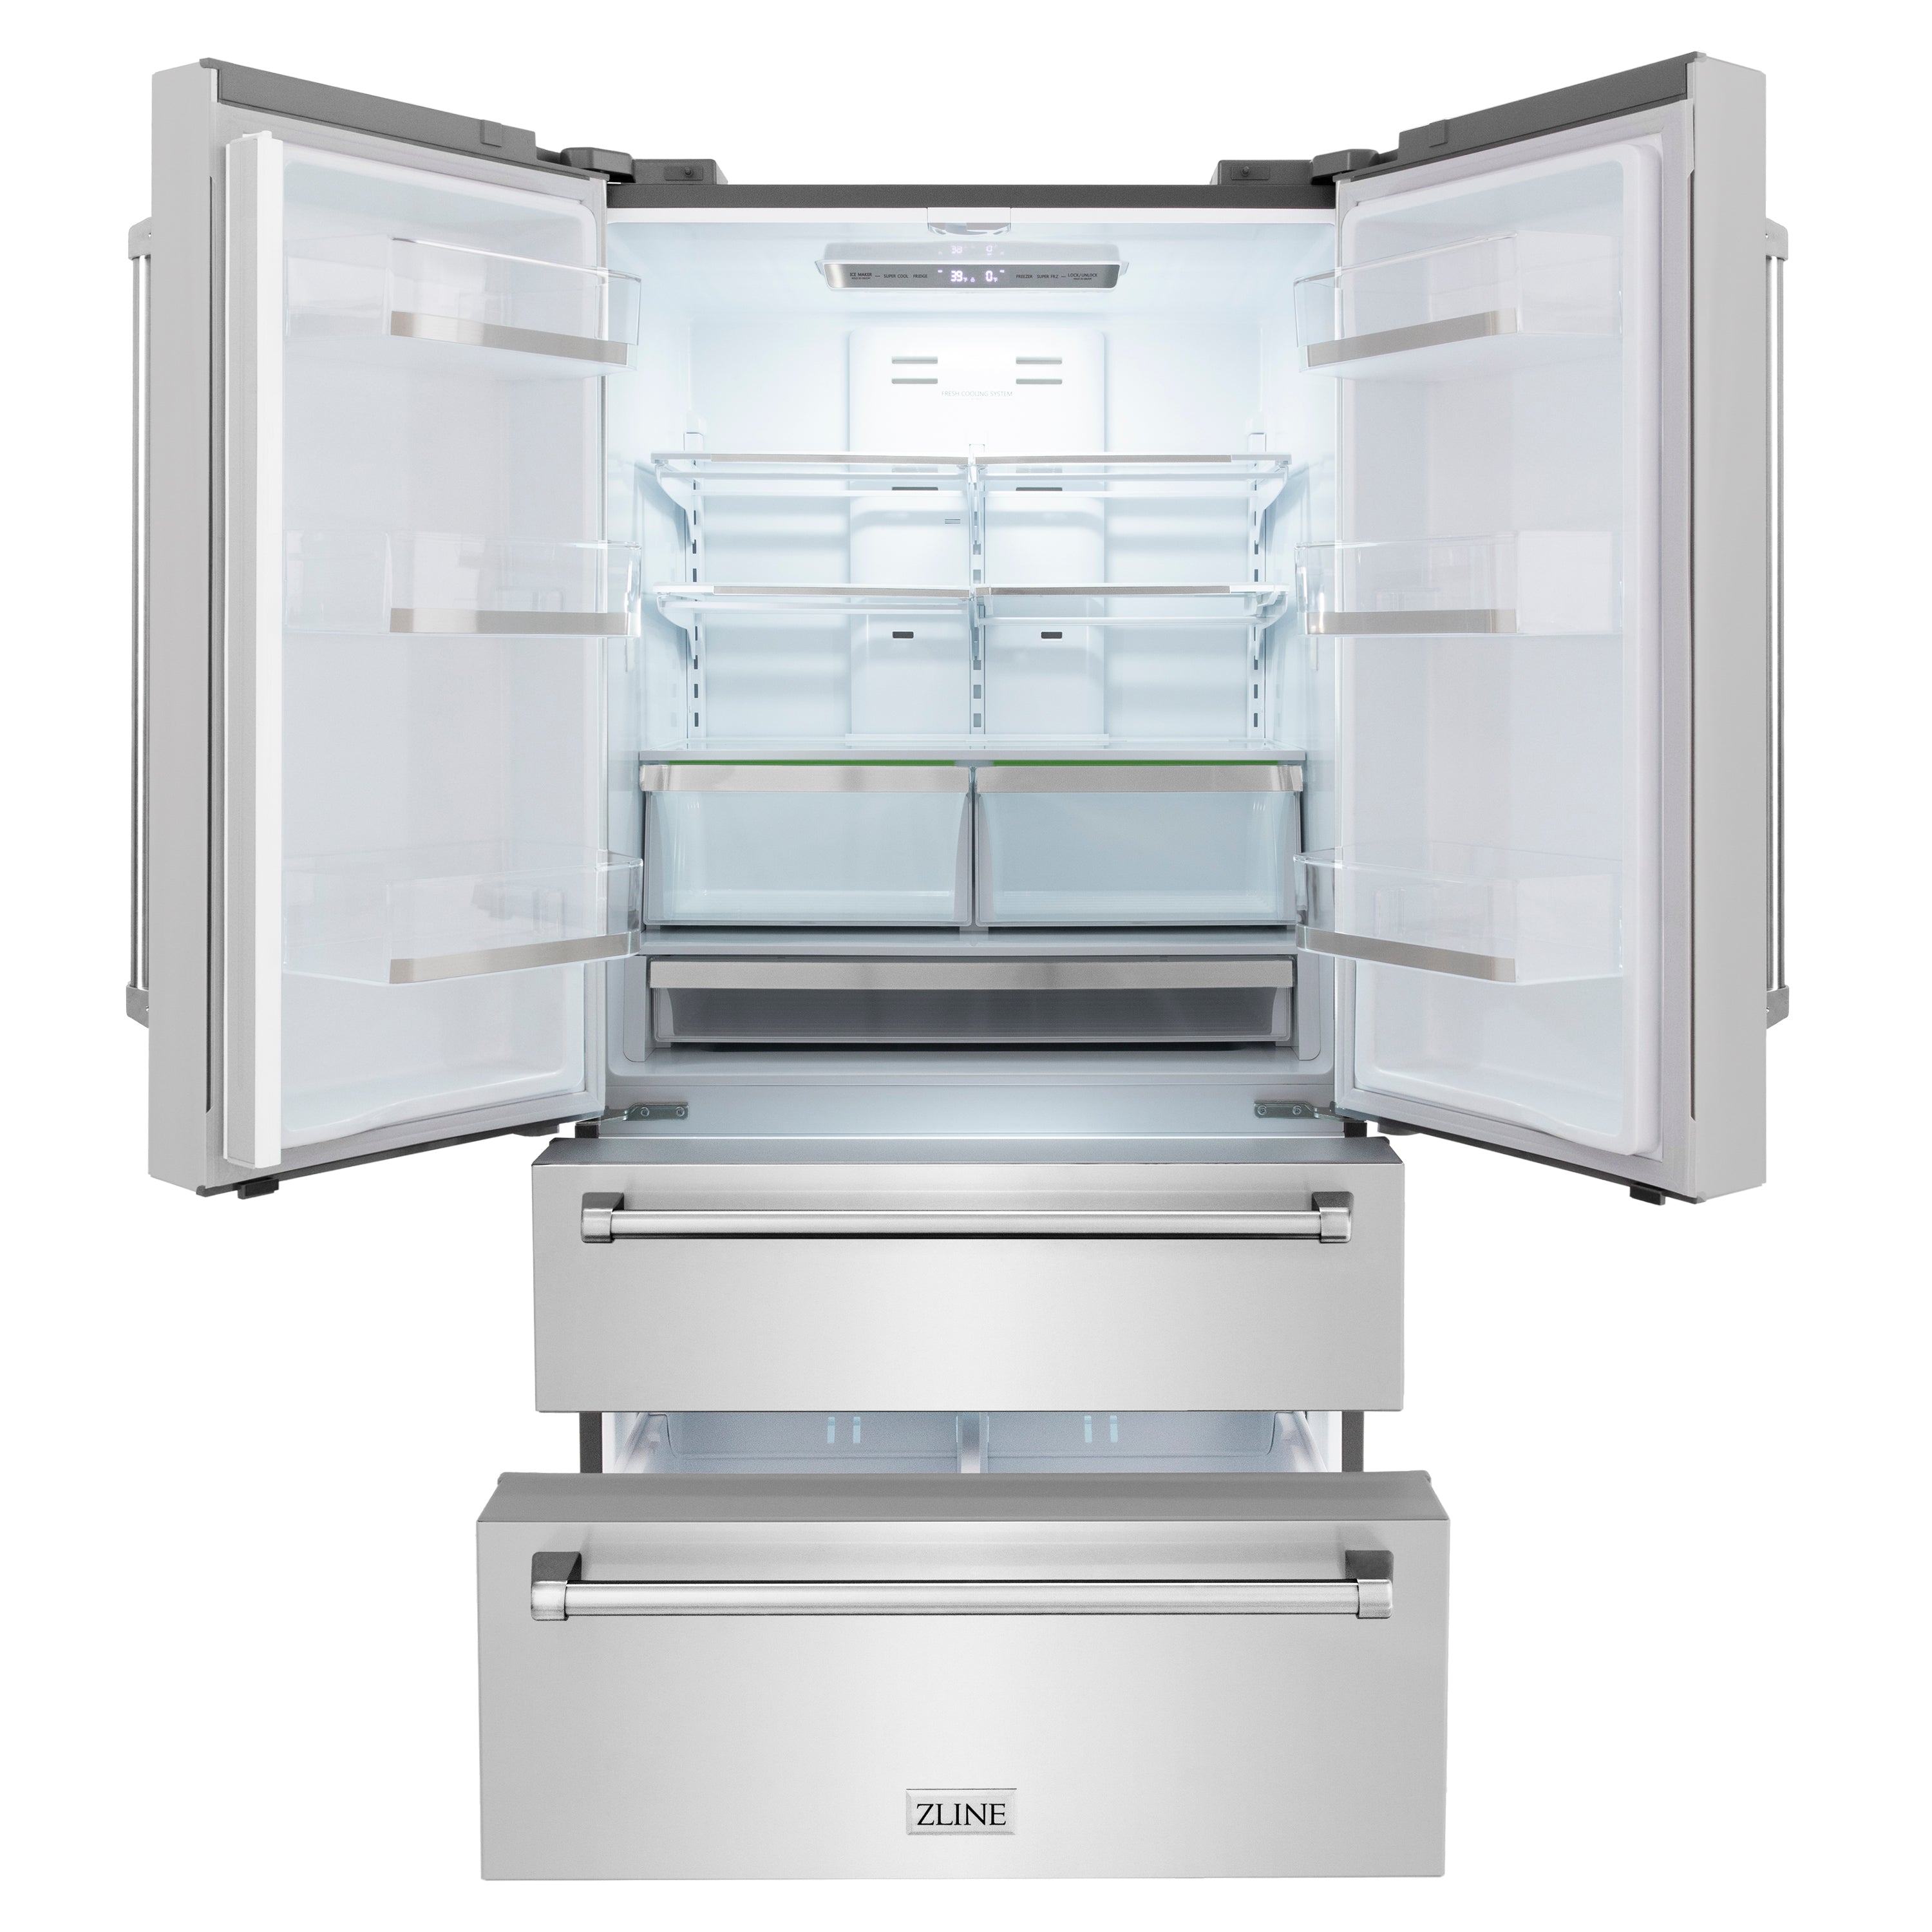 ZLINE 36 in. 22.5 cu. ft Built-in French Door Refrigerator with Ice Maker in Fingerprint Resistant Stainless Steel